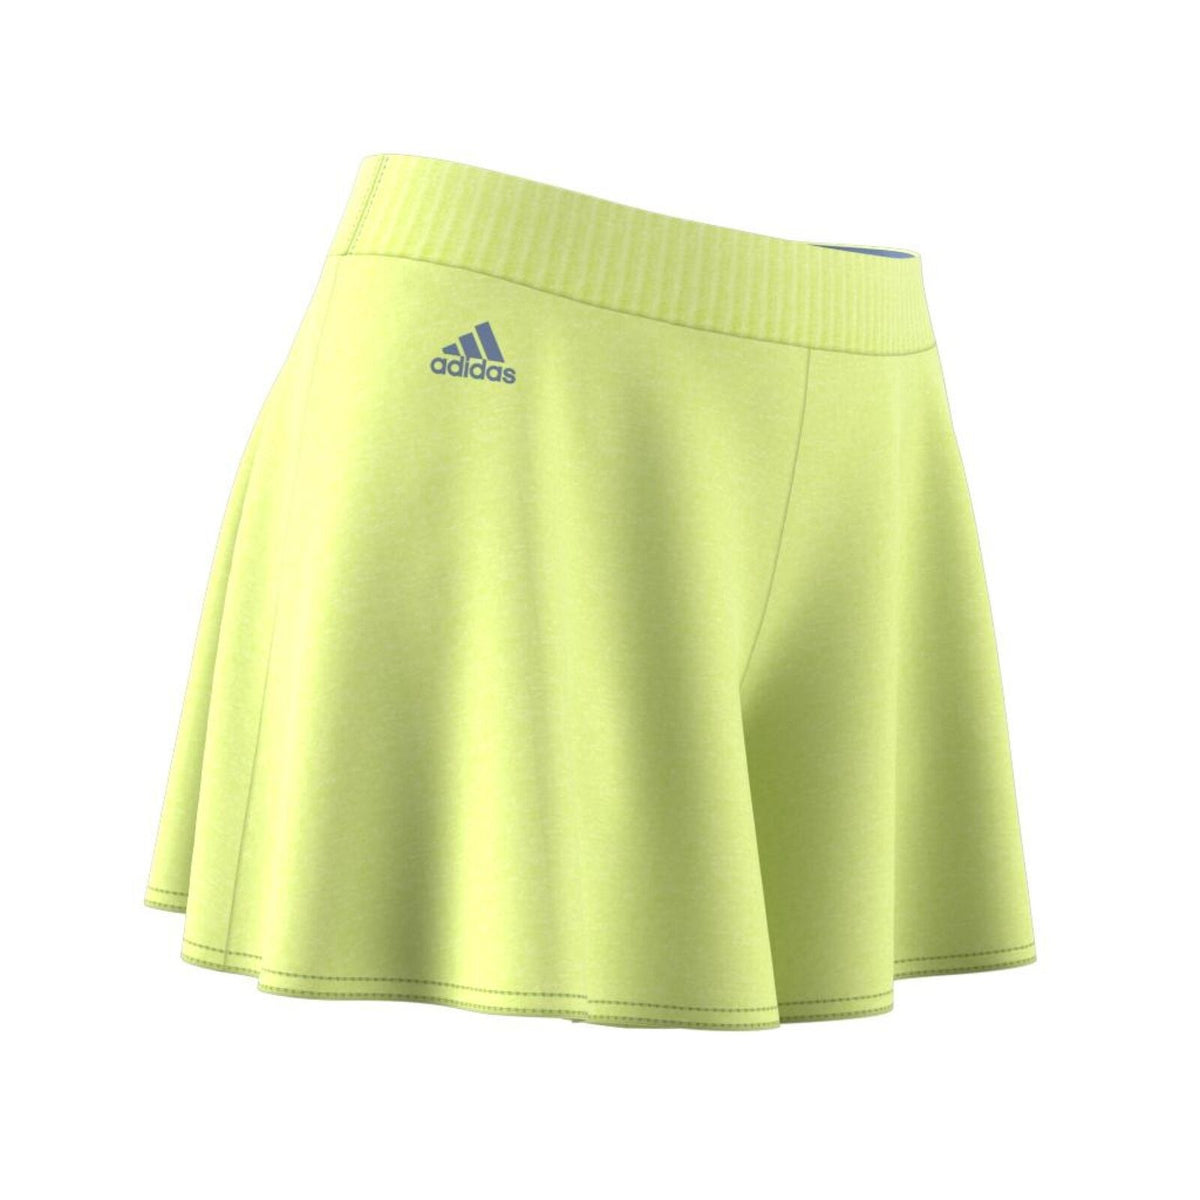 adidas Women's Melbourne Hosenrock Lightweight Tennis Shorts - Yellow - Large